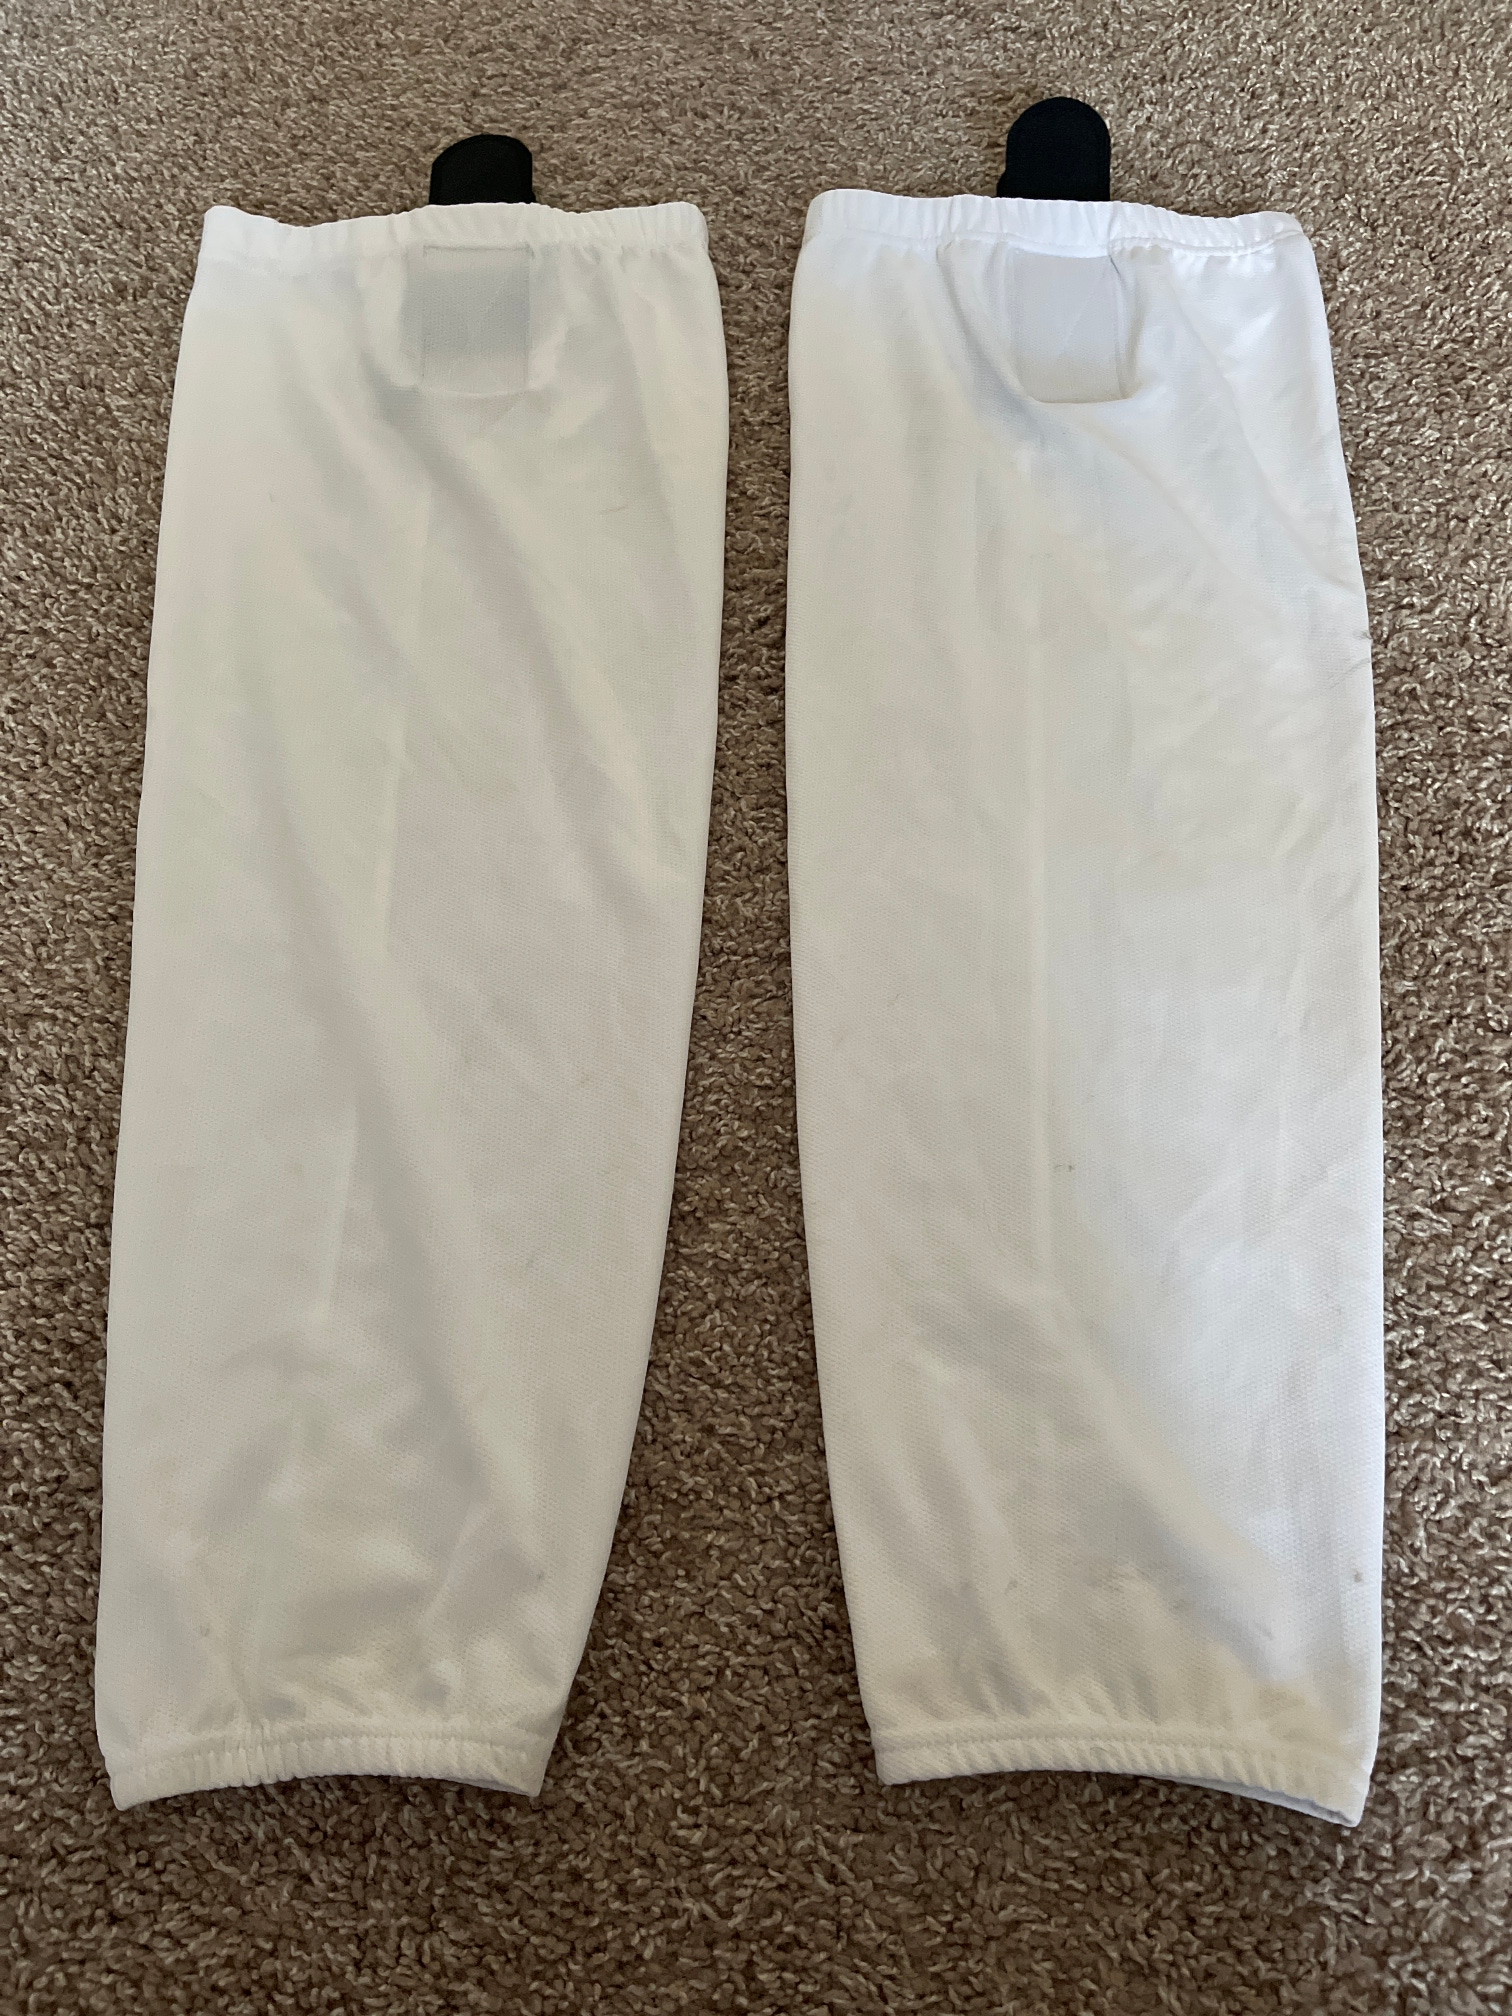 Used White Champro Socks